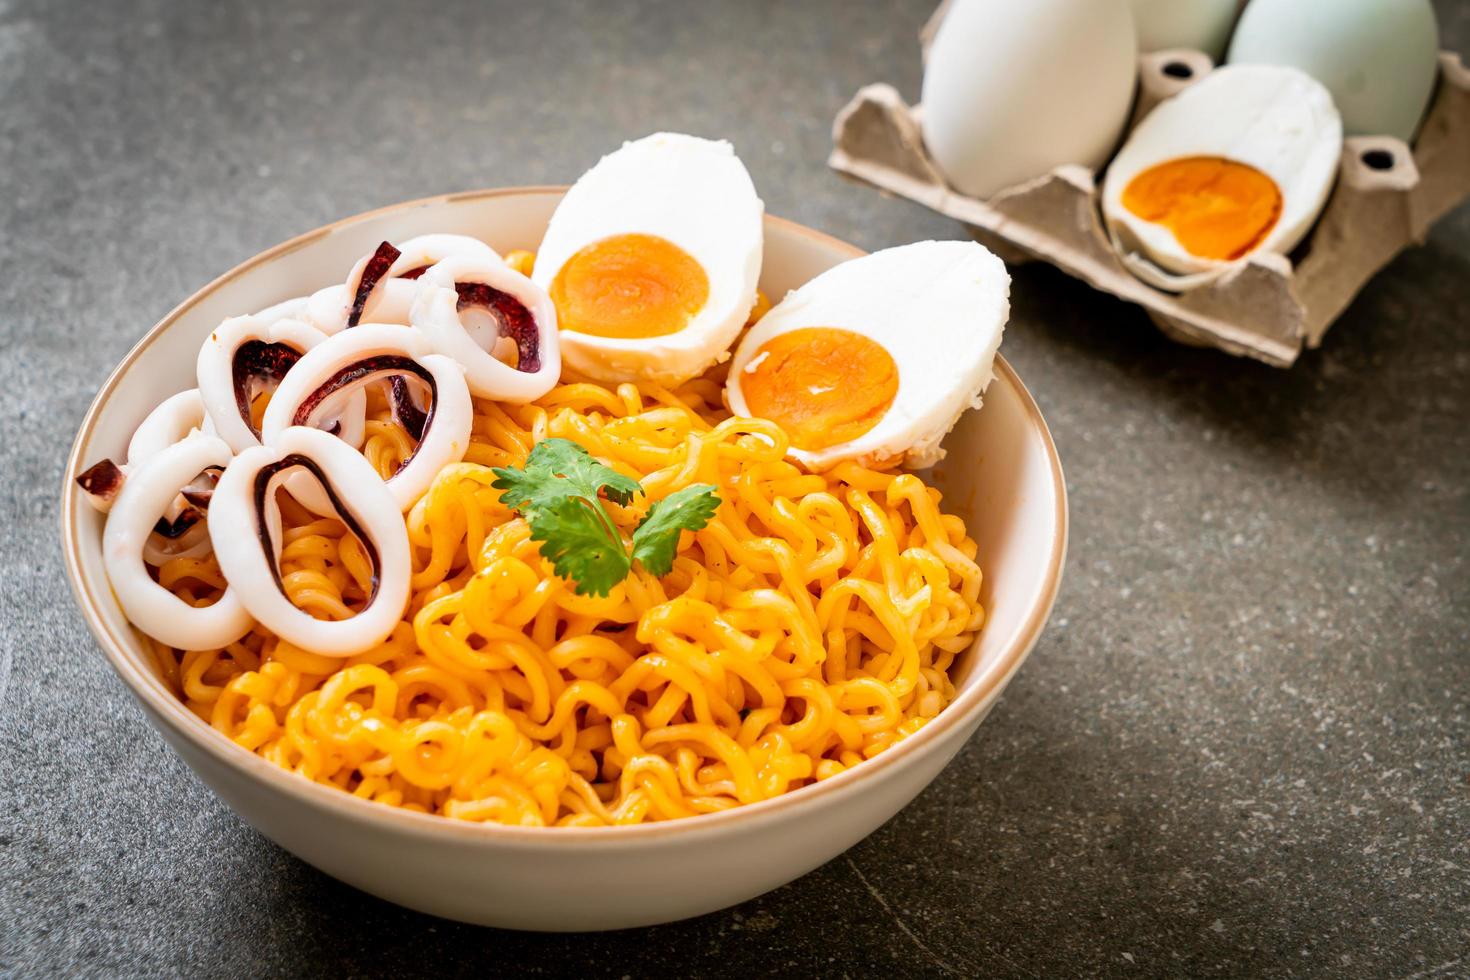 noodles istantanei sale sapore uovo con calamari o polpo ciotola foto